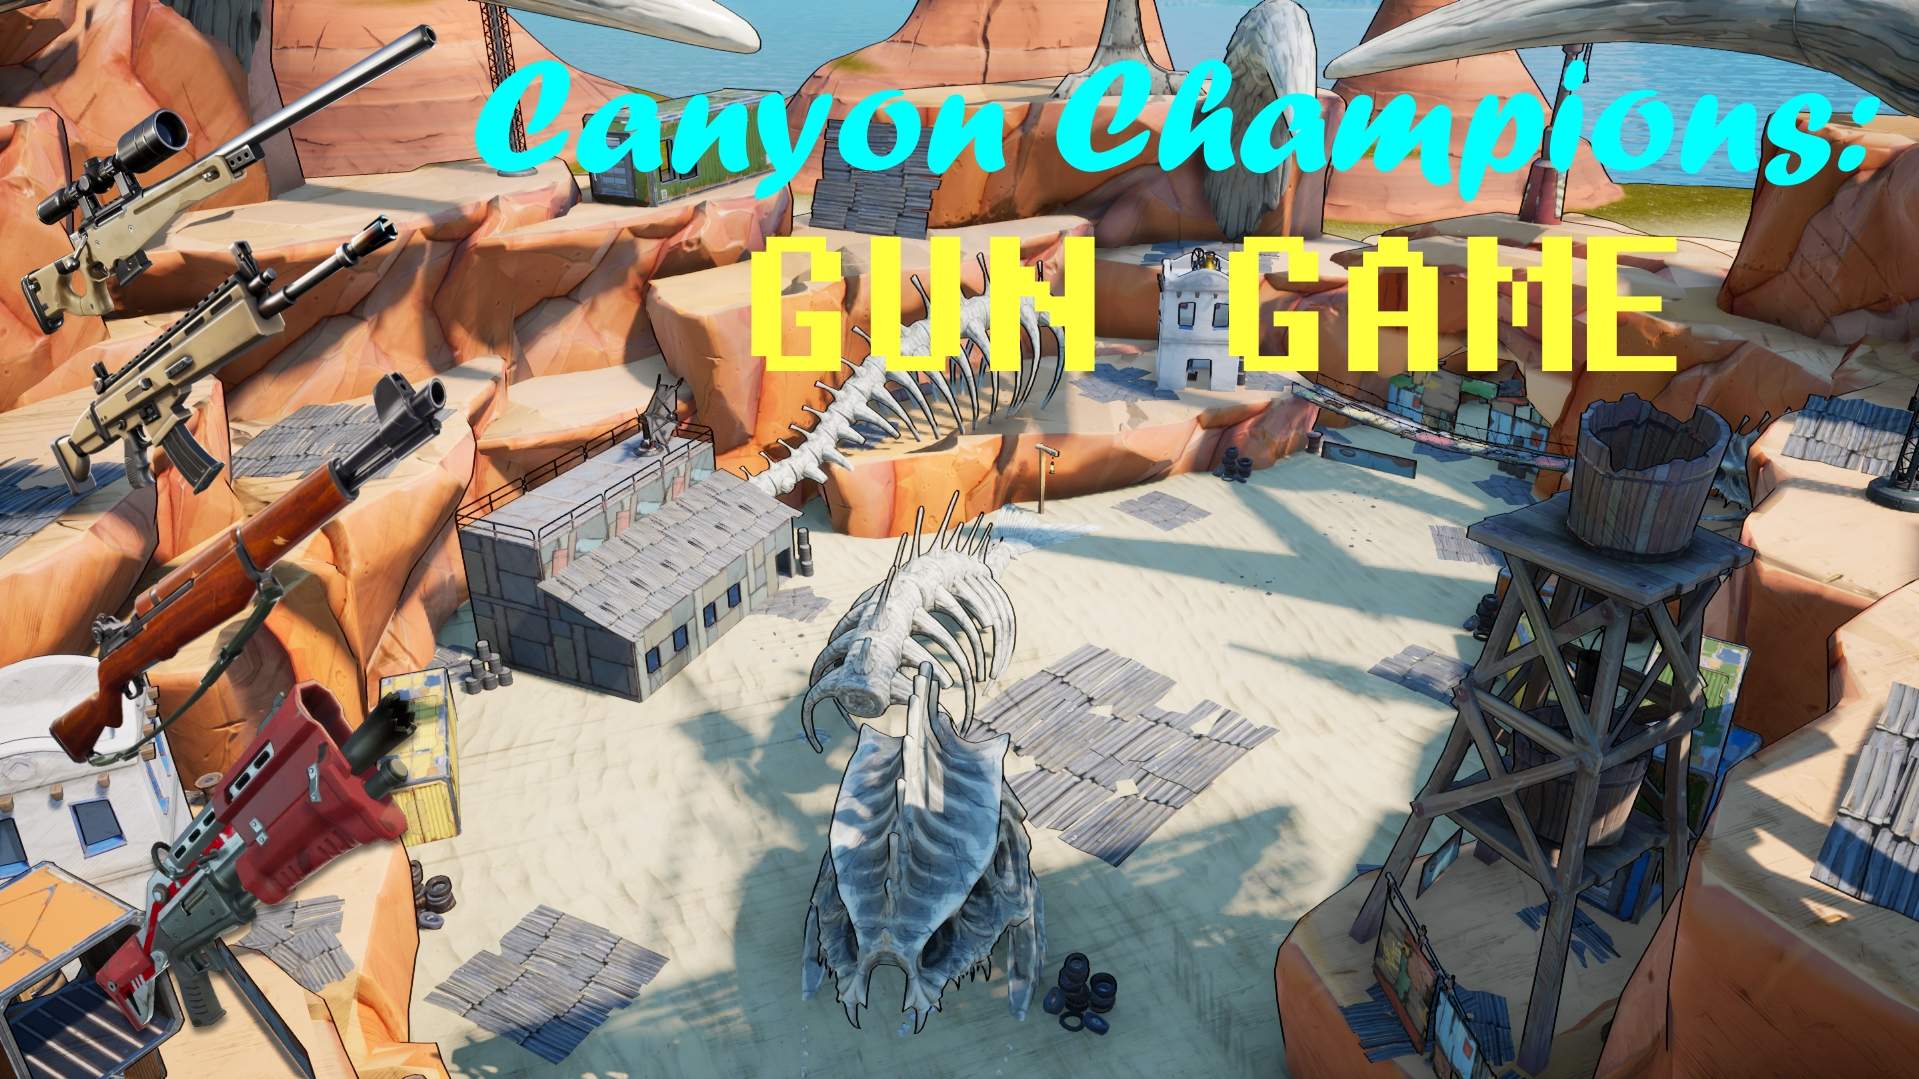 CANYON CHAMPIONS: GUN GAME